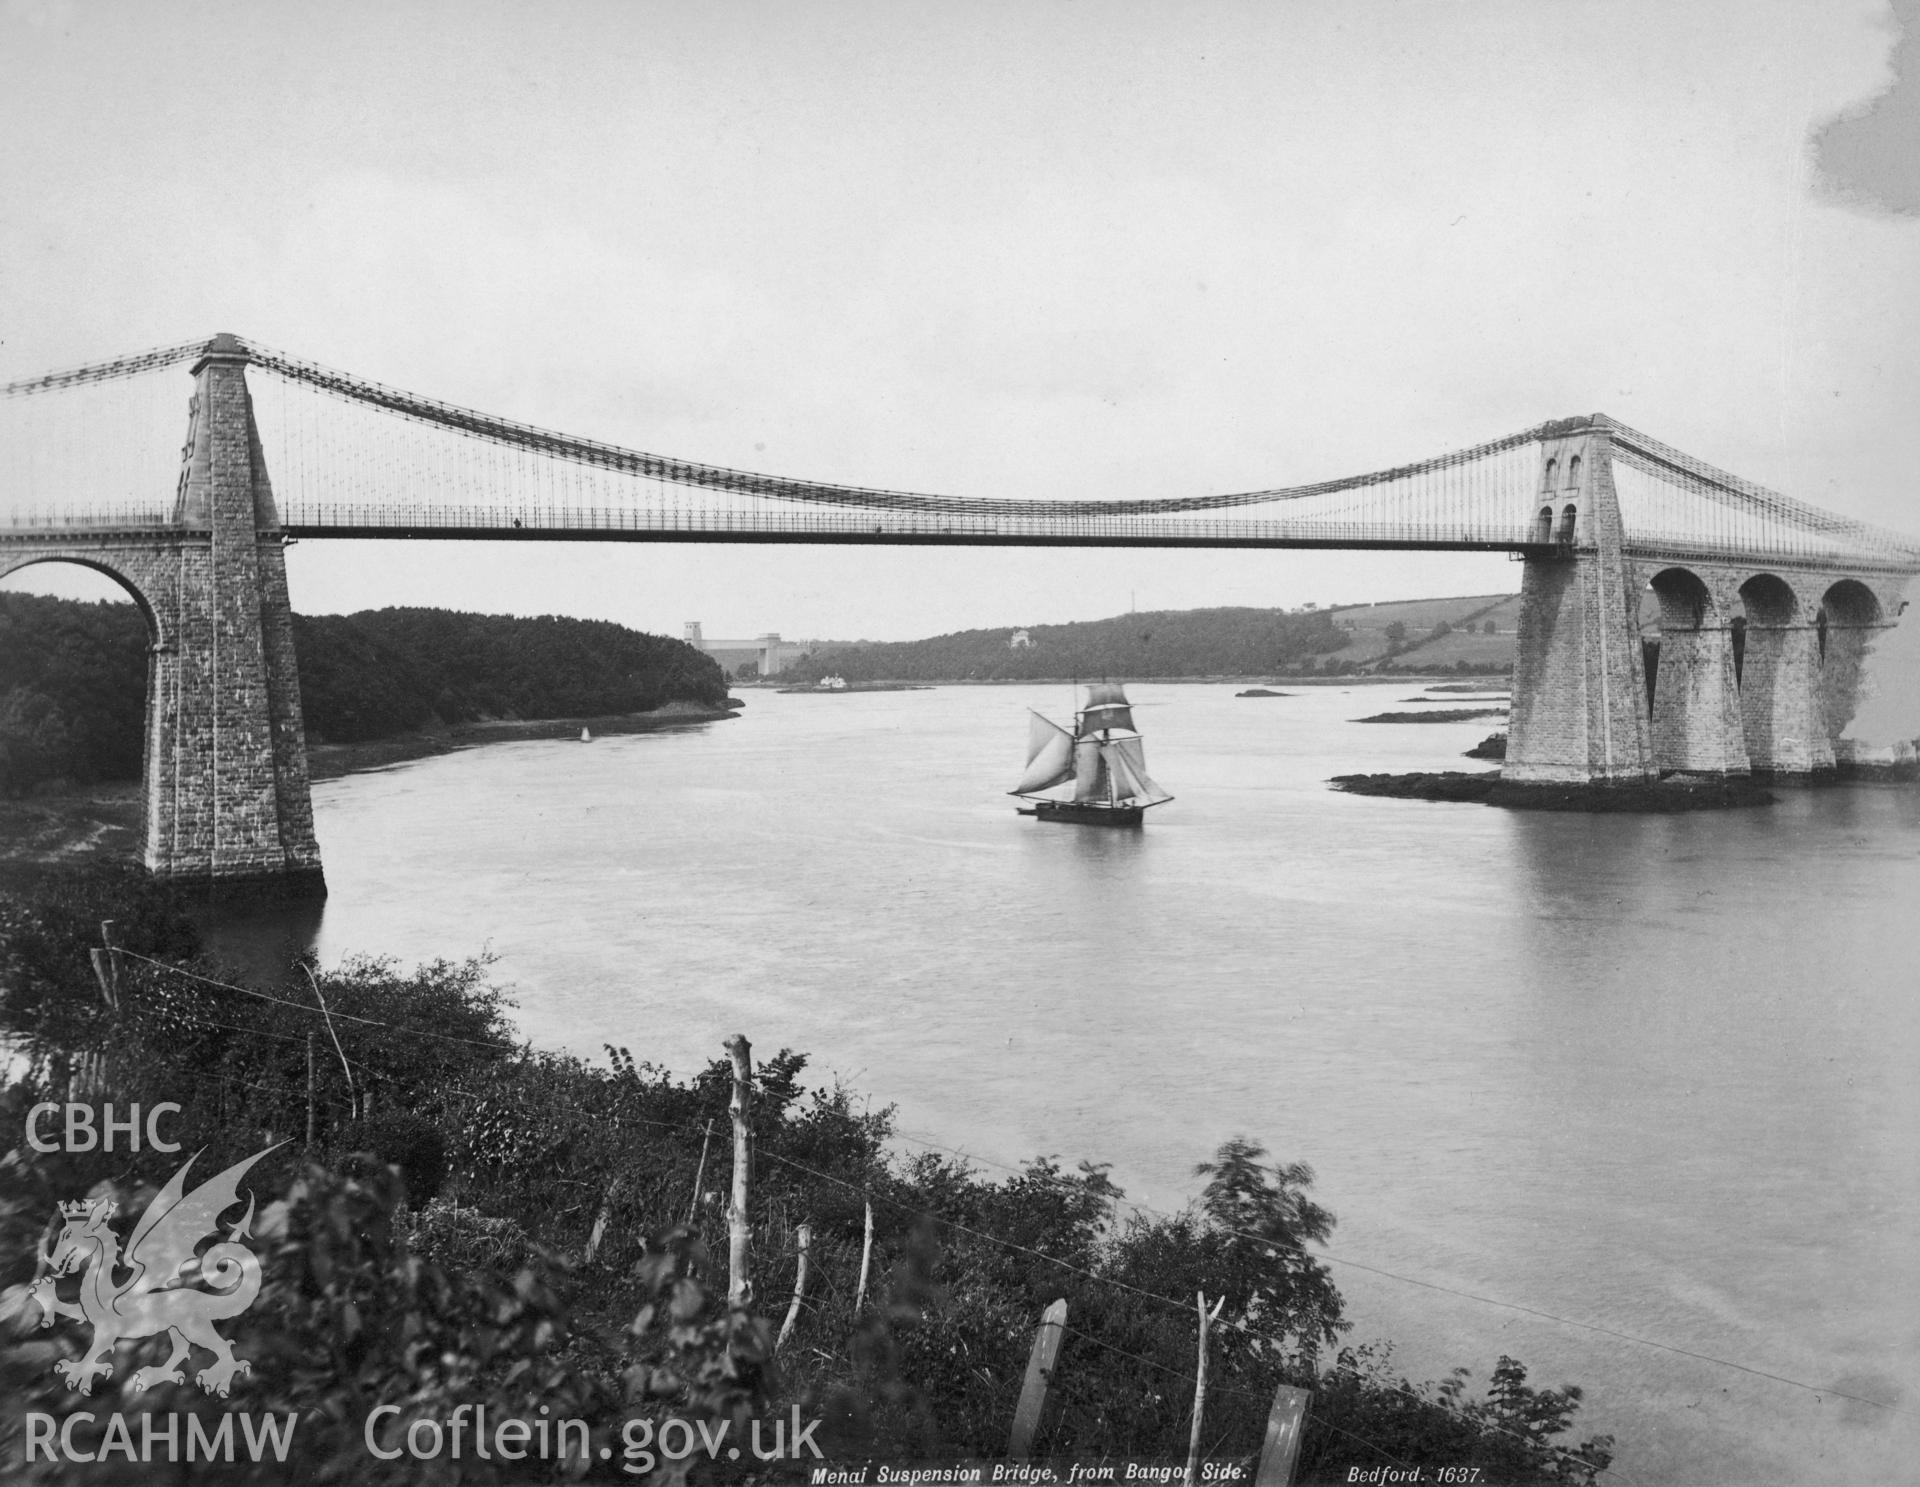 Black and white print of Menai Suspension Bridge, Menai Bridge, showing the bridge from the Bangor side with a topsail schooner sailing underneath.